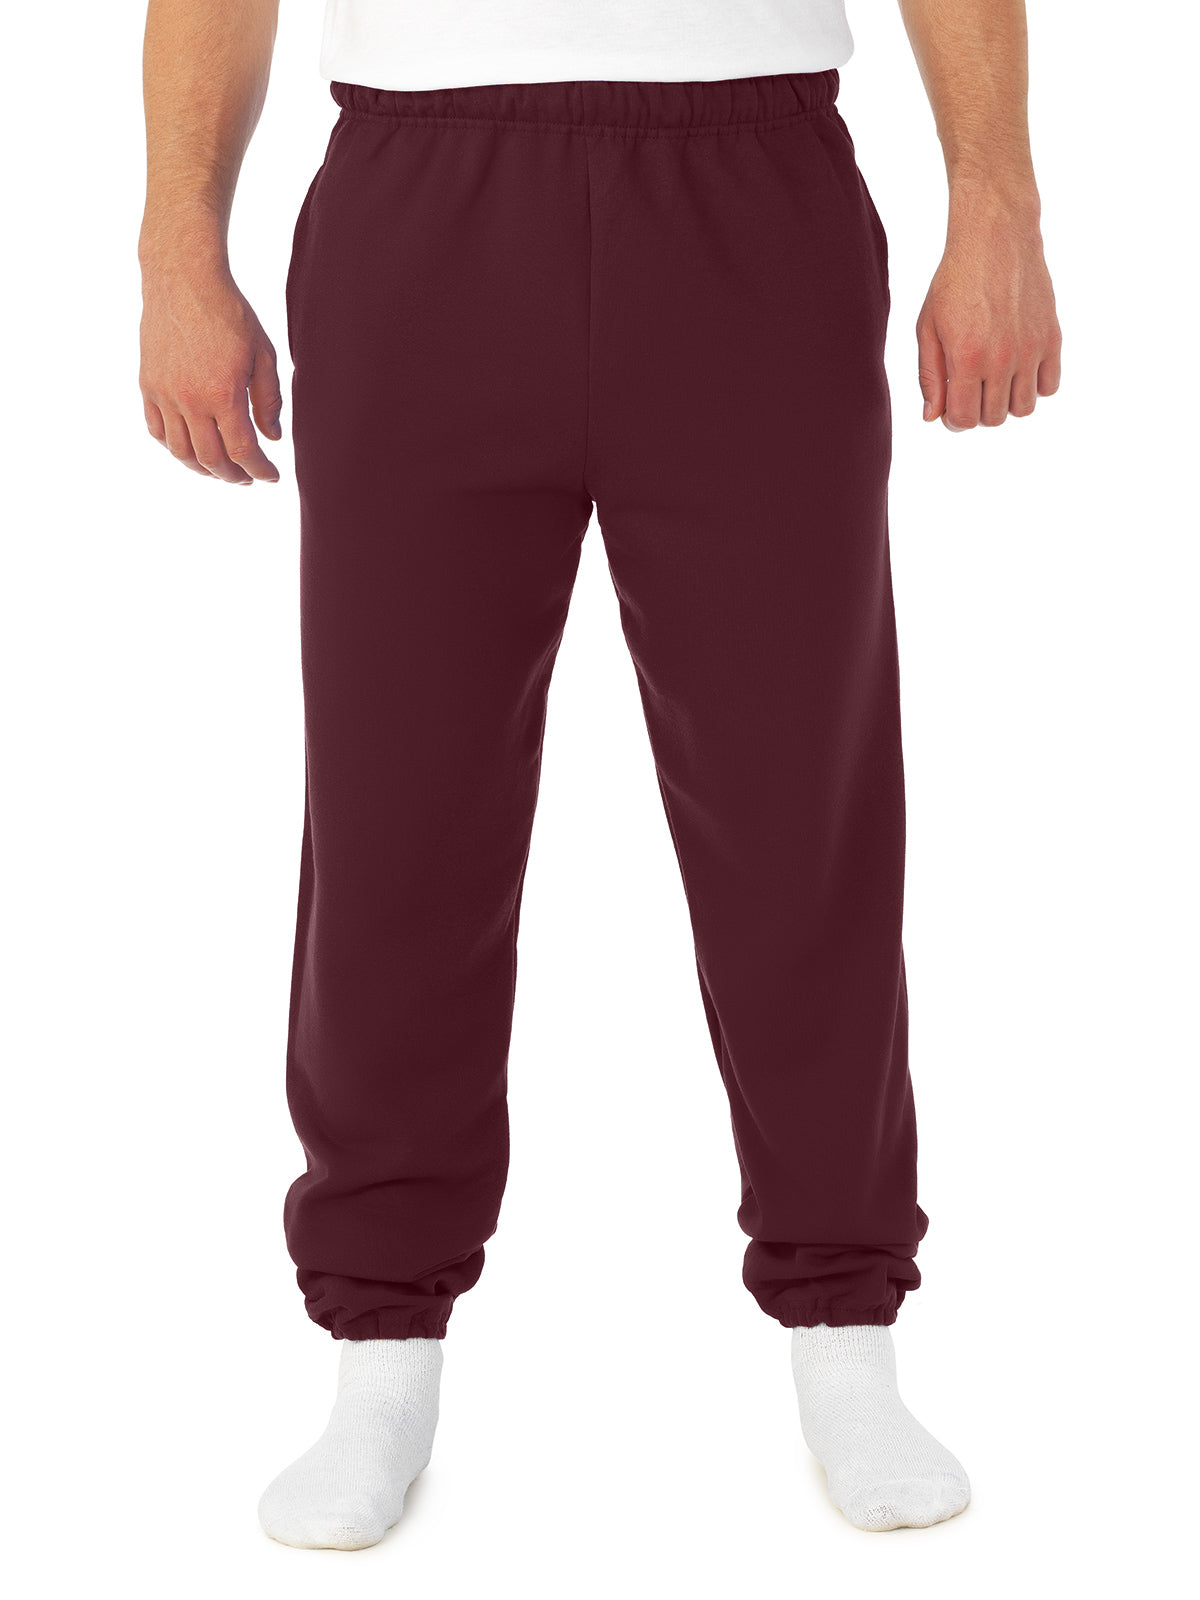 JZ4850MR - Jerzees Mens NuBlend Super Sweats Pocketed Sweatpants